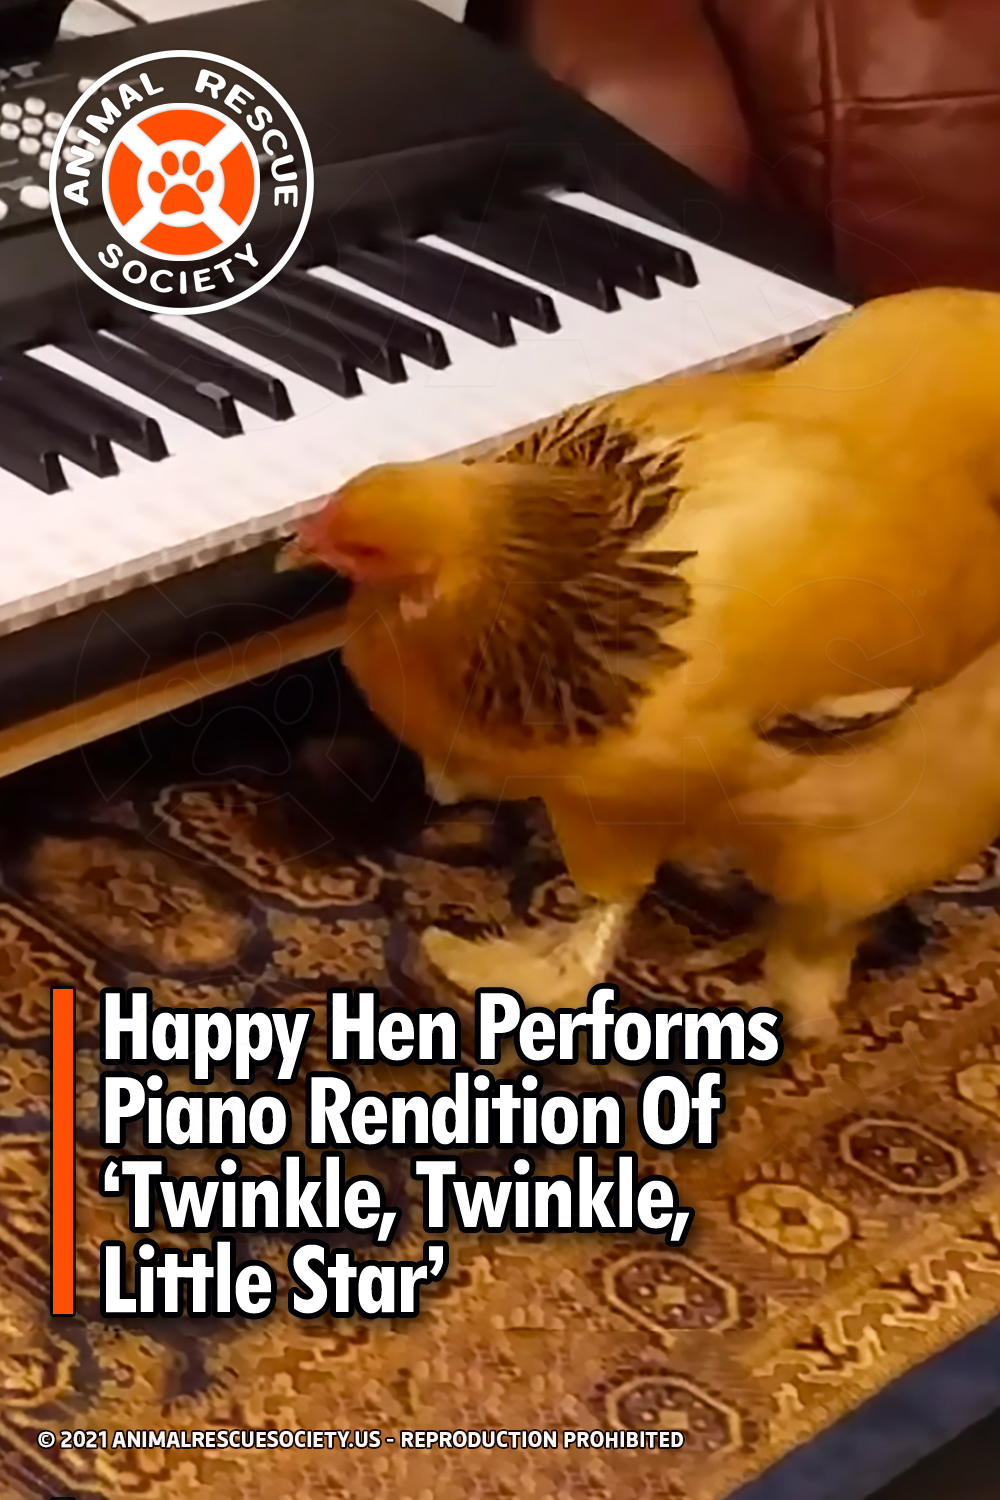 Happy Hen Performs Piano Rendition Of ‘Twinkle, Twinkle, Little Star’